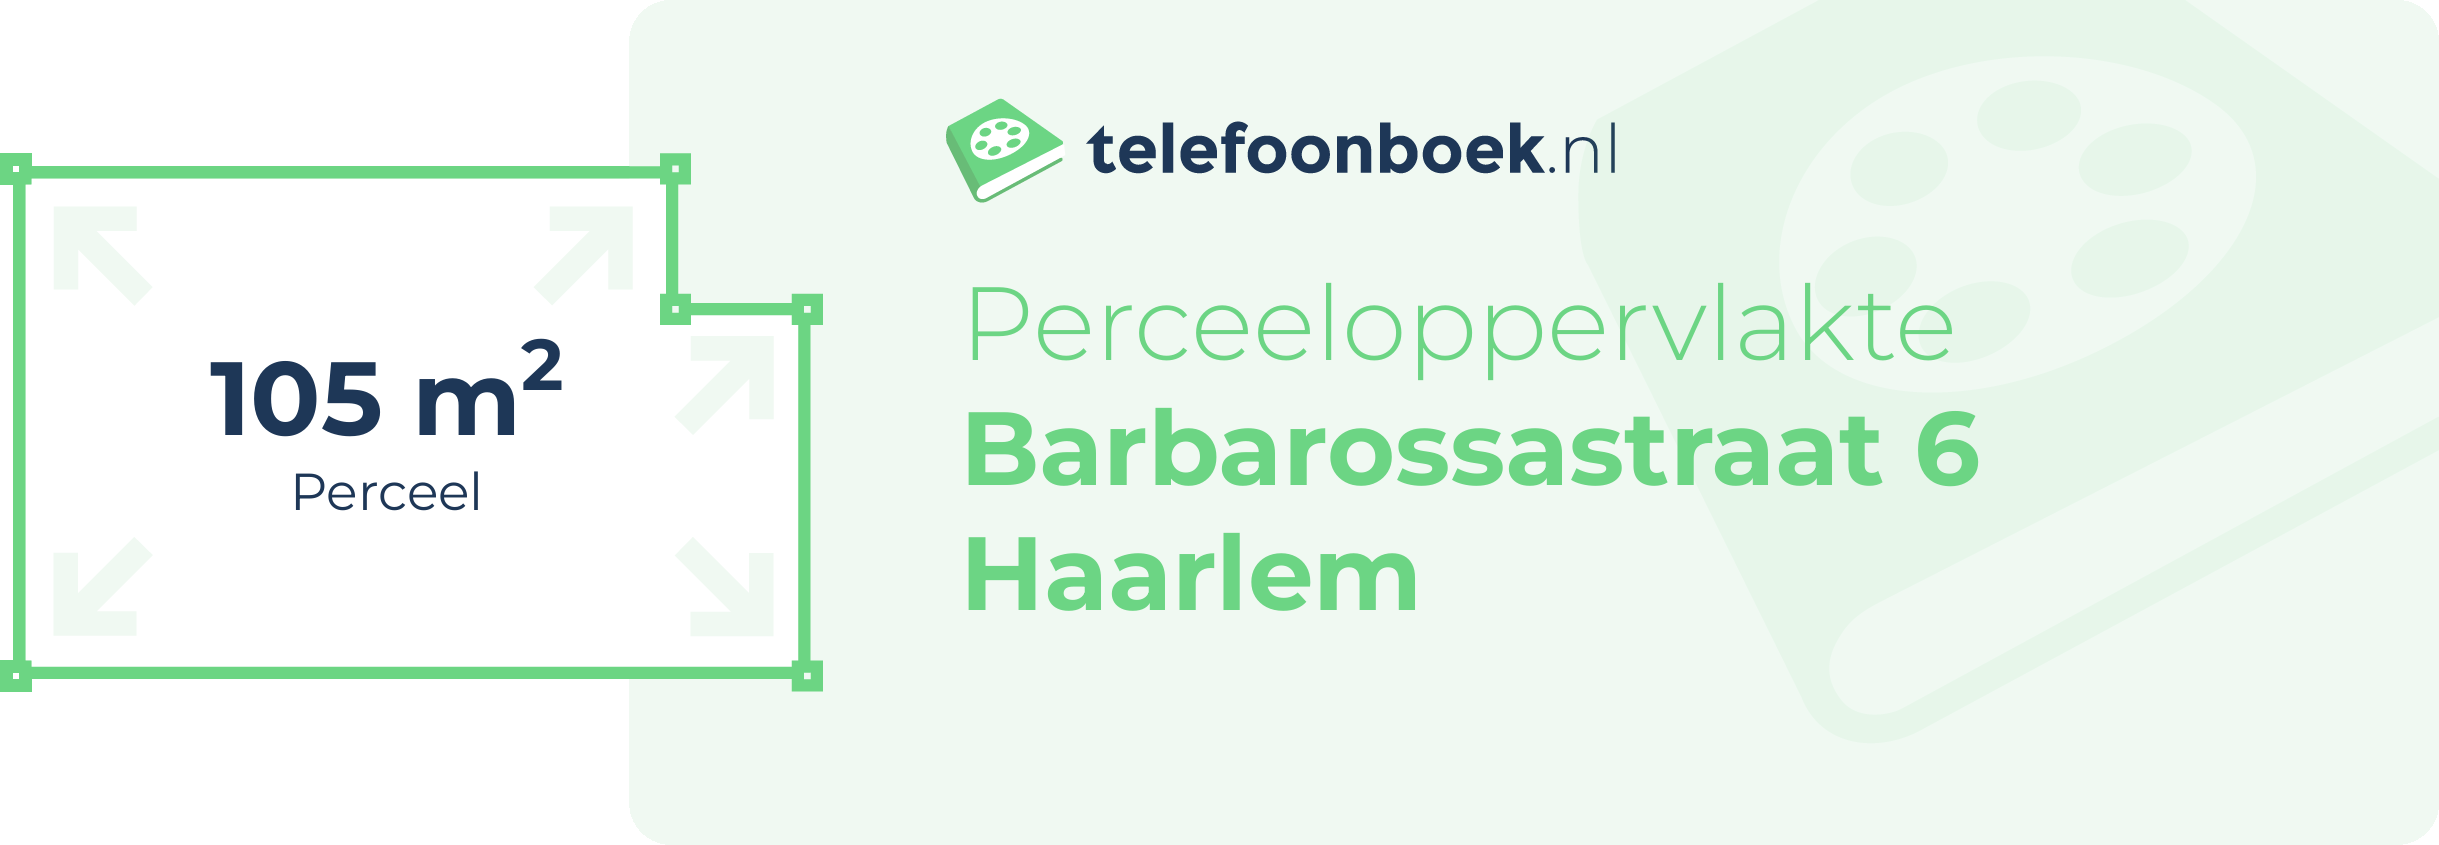 Perceeloppervlakte Barbarossastraat 6 Haarlem